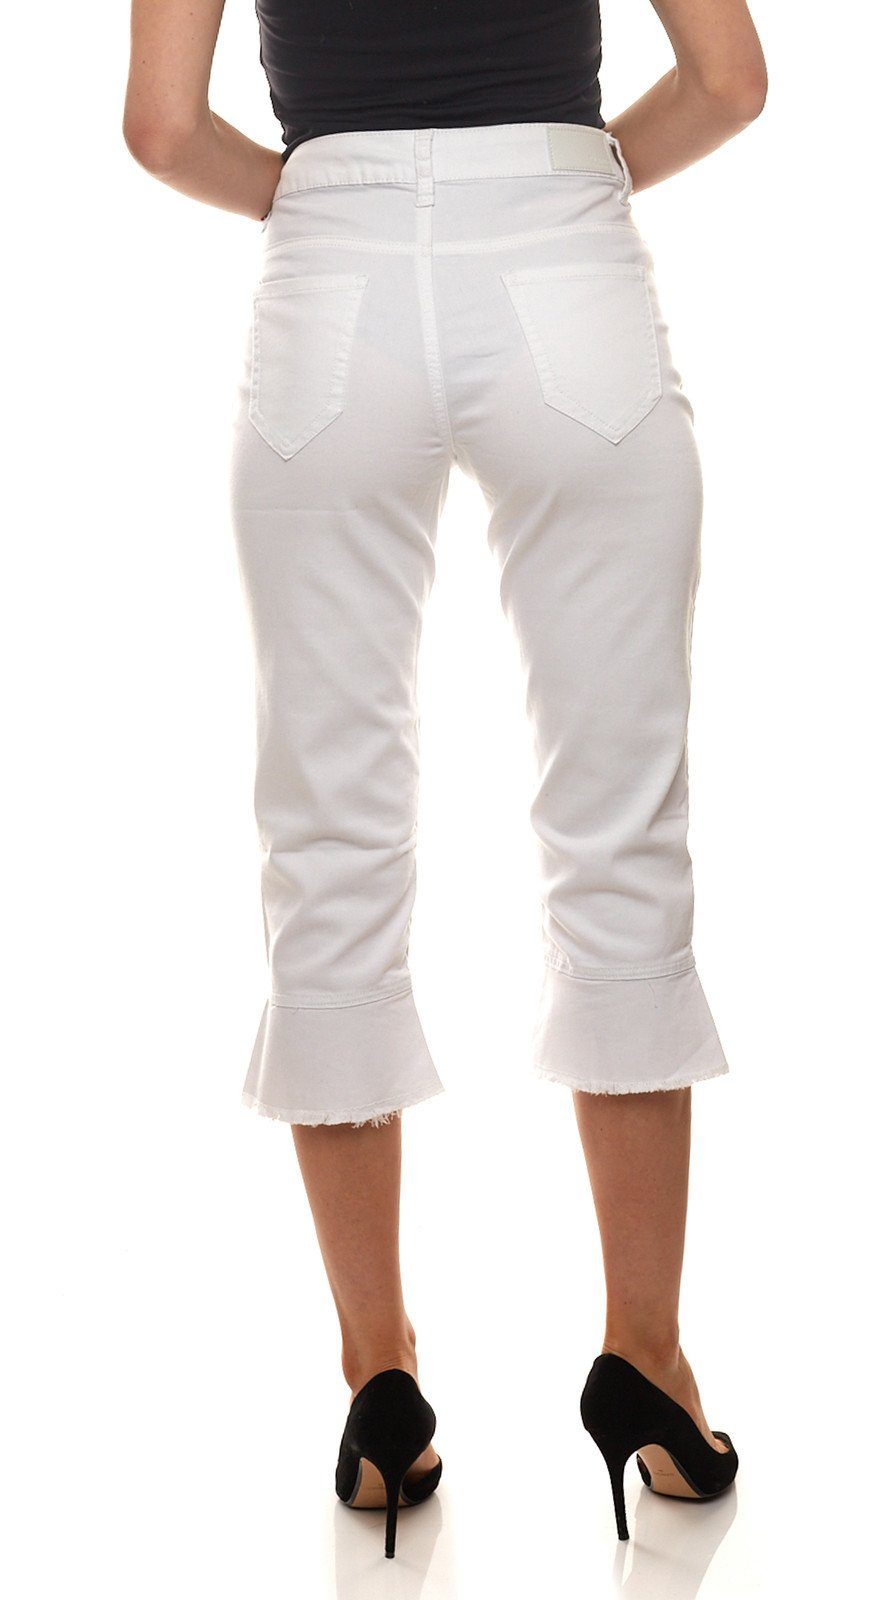 Vision Fitness CLAIRE WOMAN Caprihose WOMAN modische Stoff-Hose Capri-Jeans Volant CLAIRE ausgefranstem Weiß Freizeit-Hose mit Damen